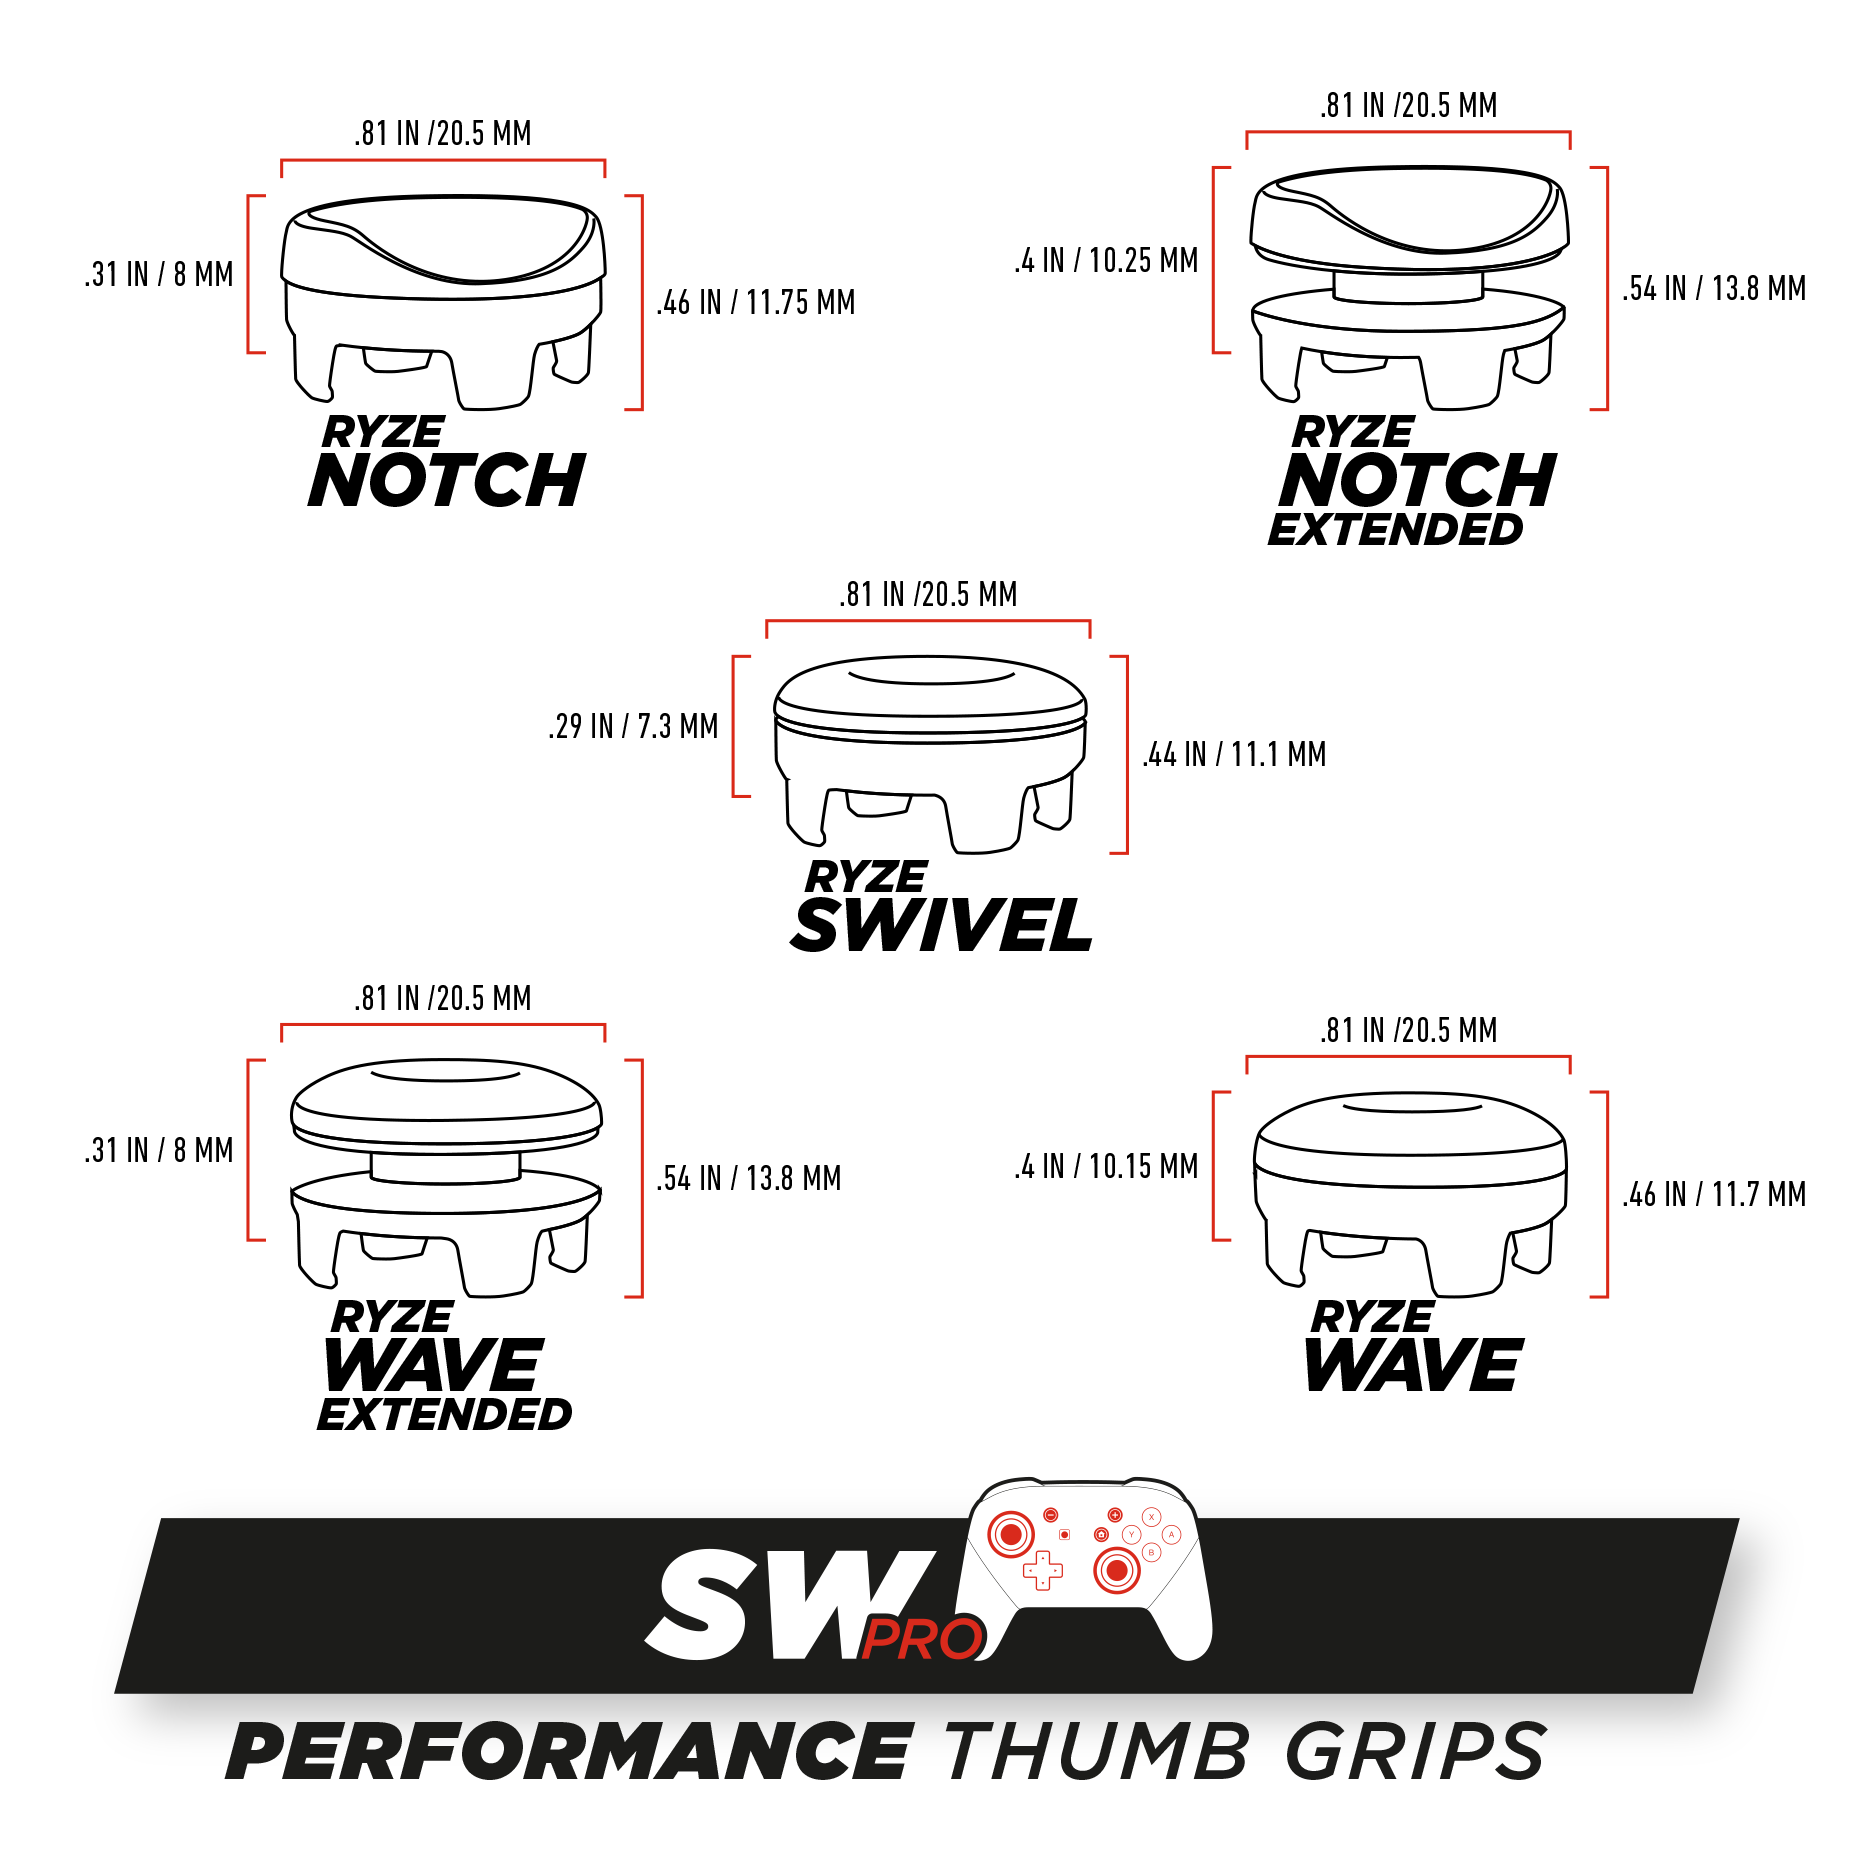 RYZE Performance Thumb Grips Dimensions